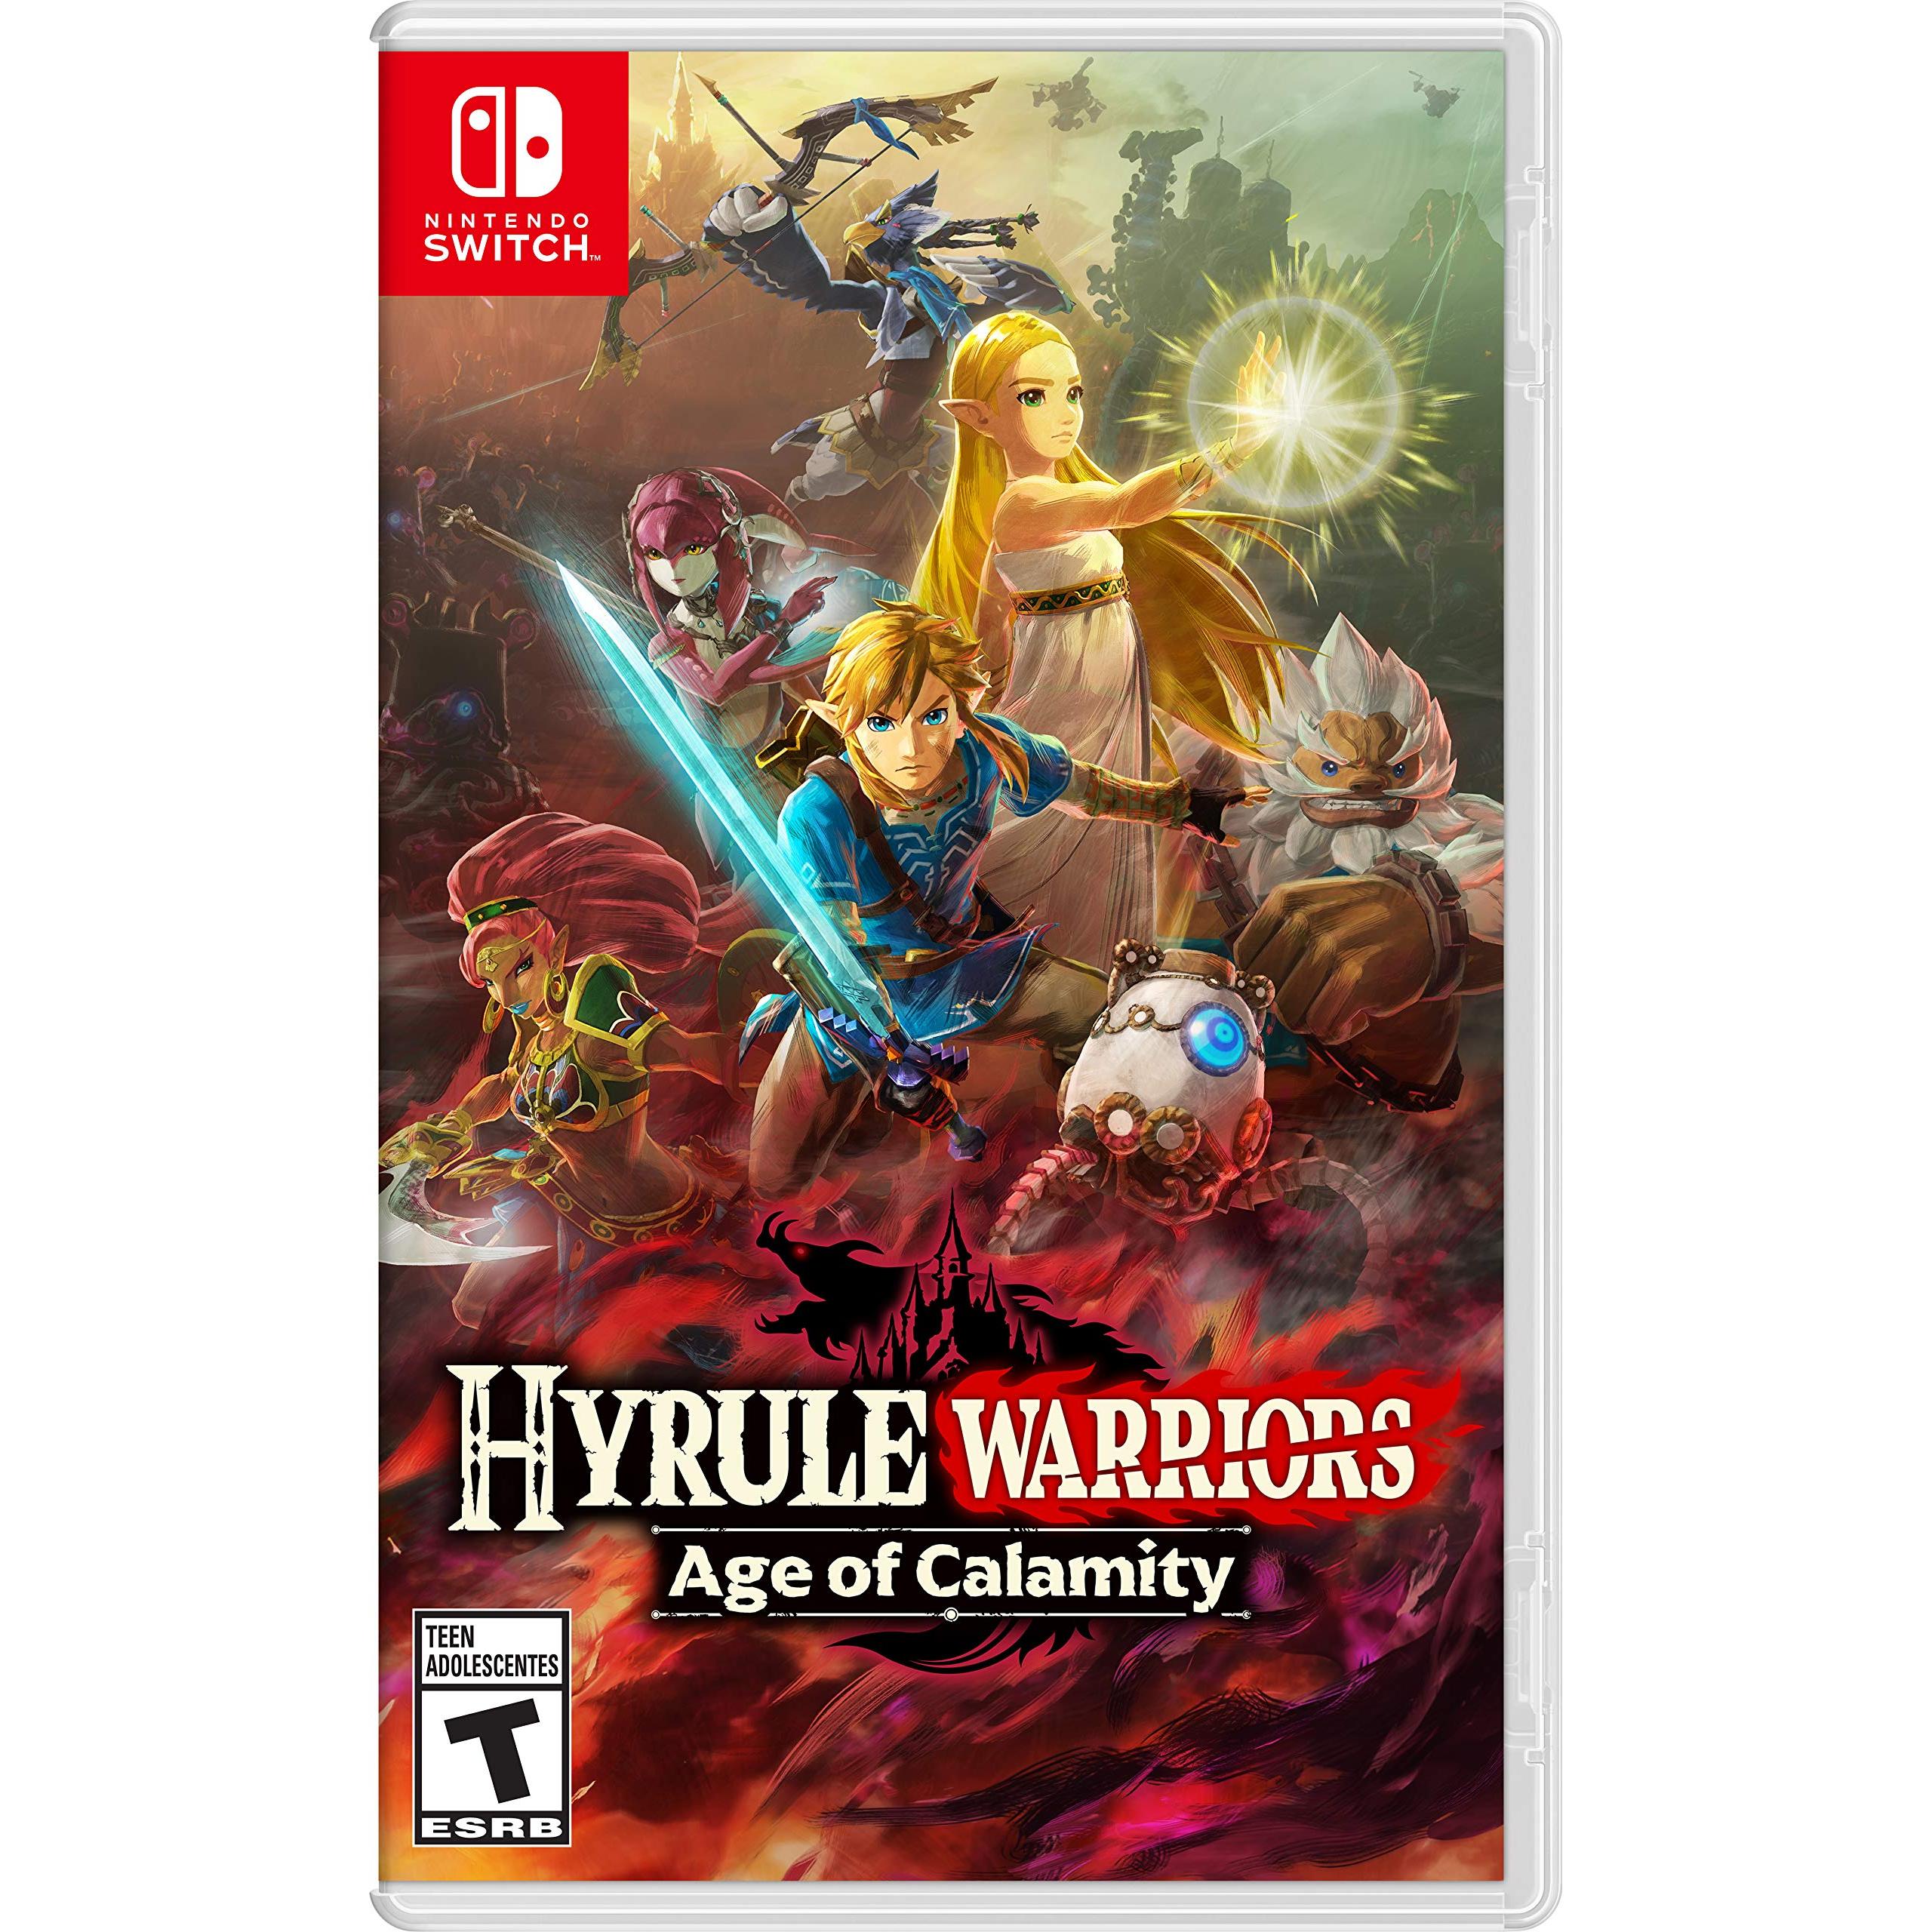 Nintendo - Hyrule Warriors: Age of Calamity